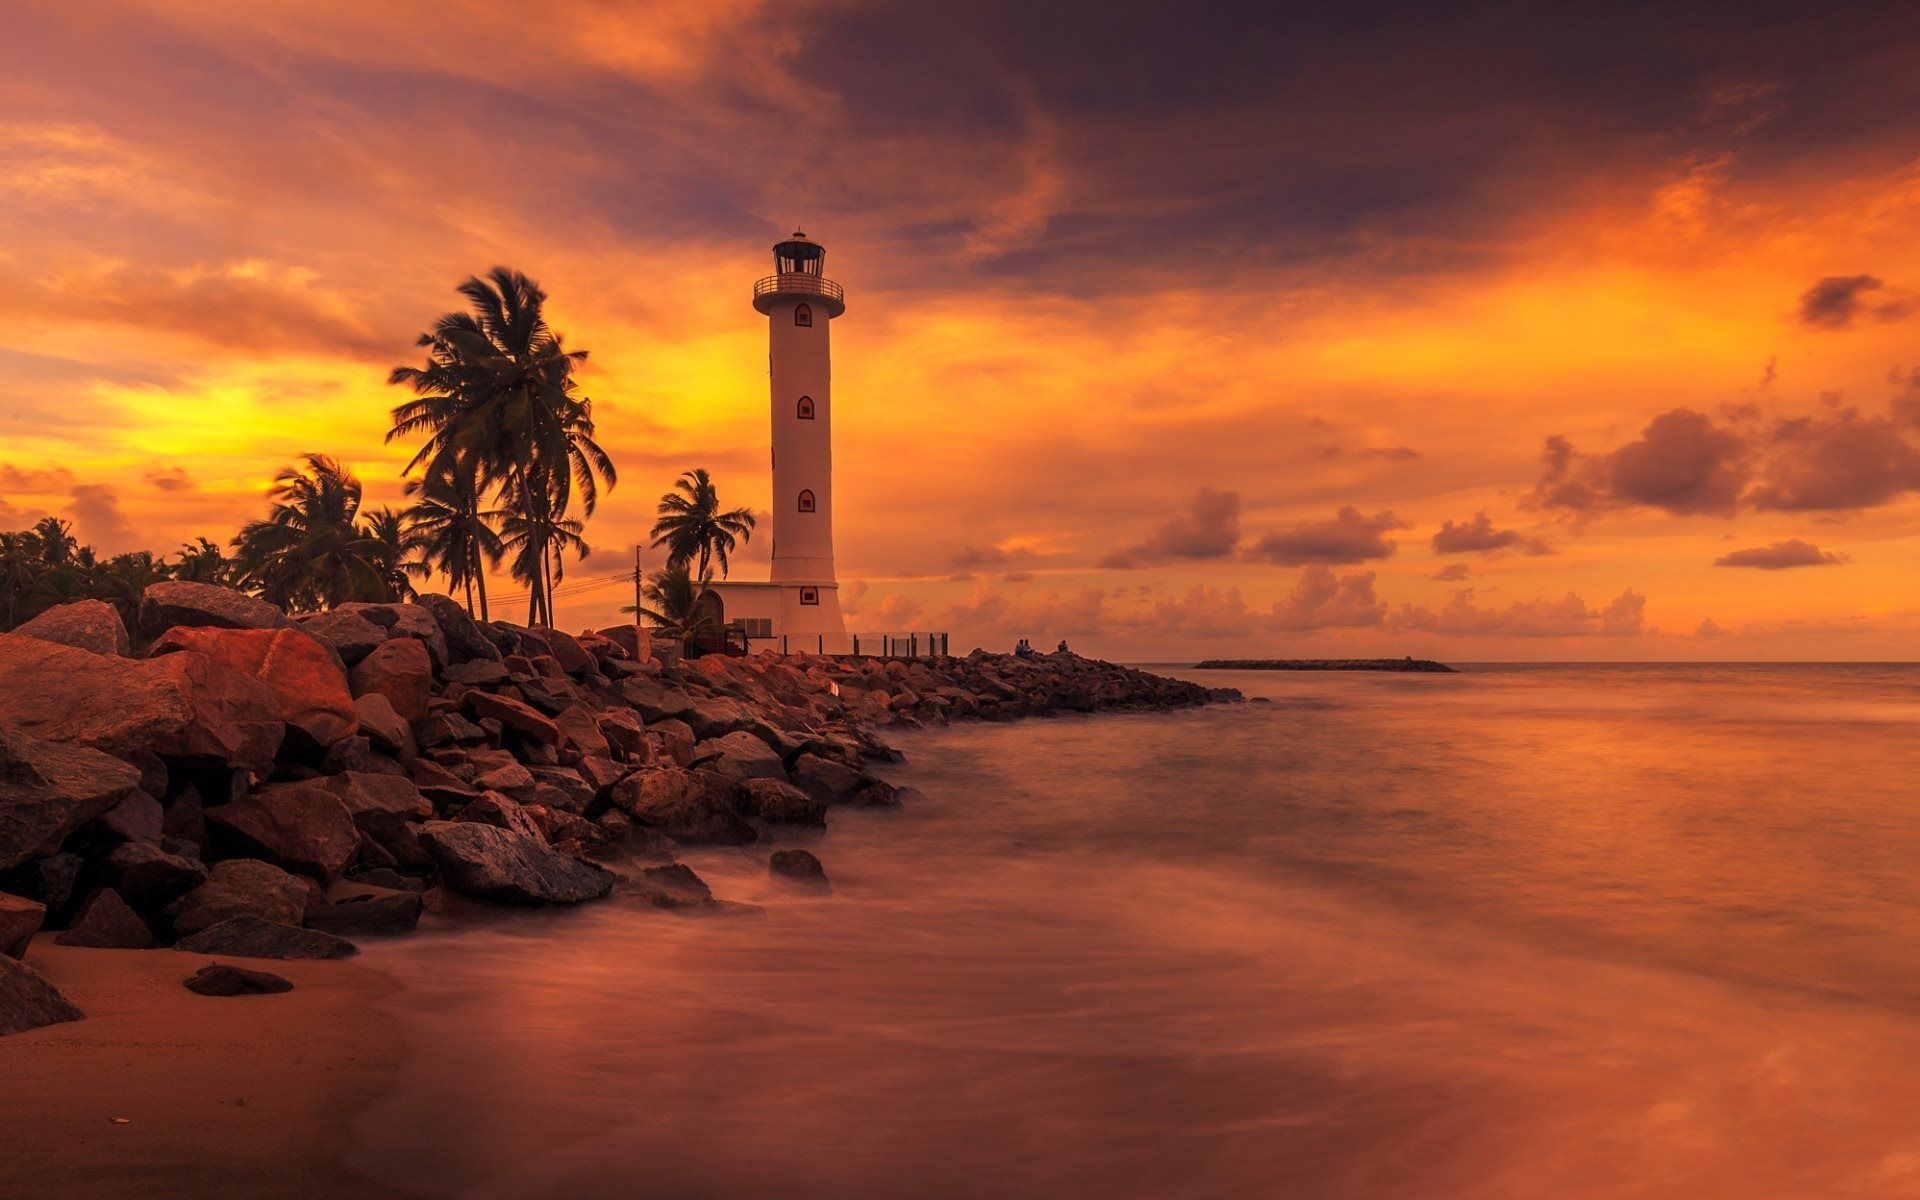 Download wallpaper Lighthouse, palm trees, sunset, evening, beach